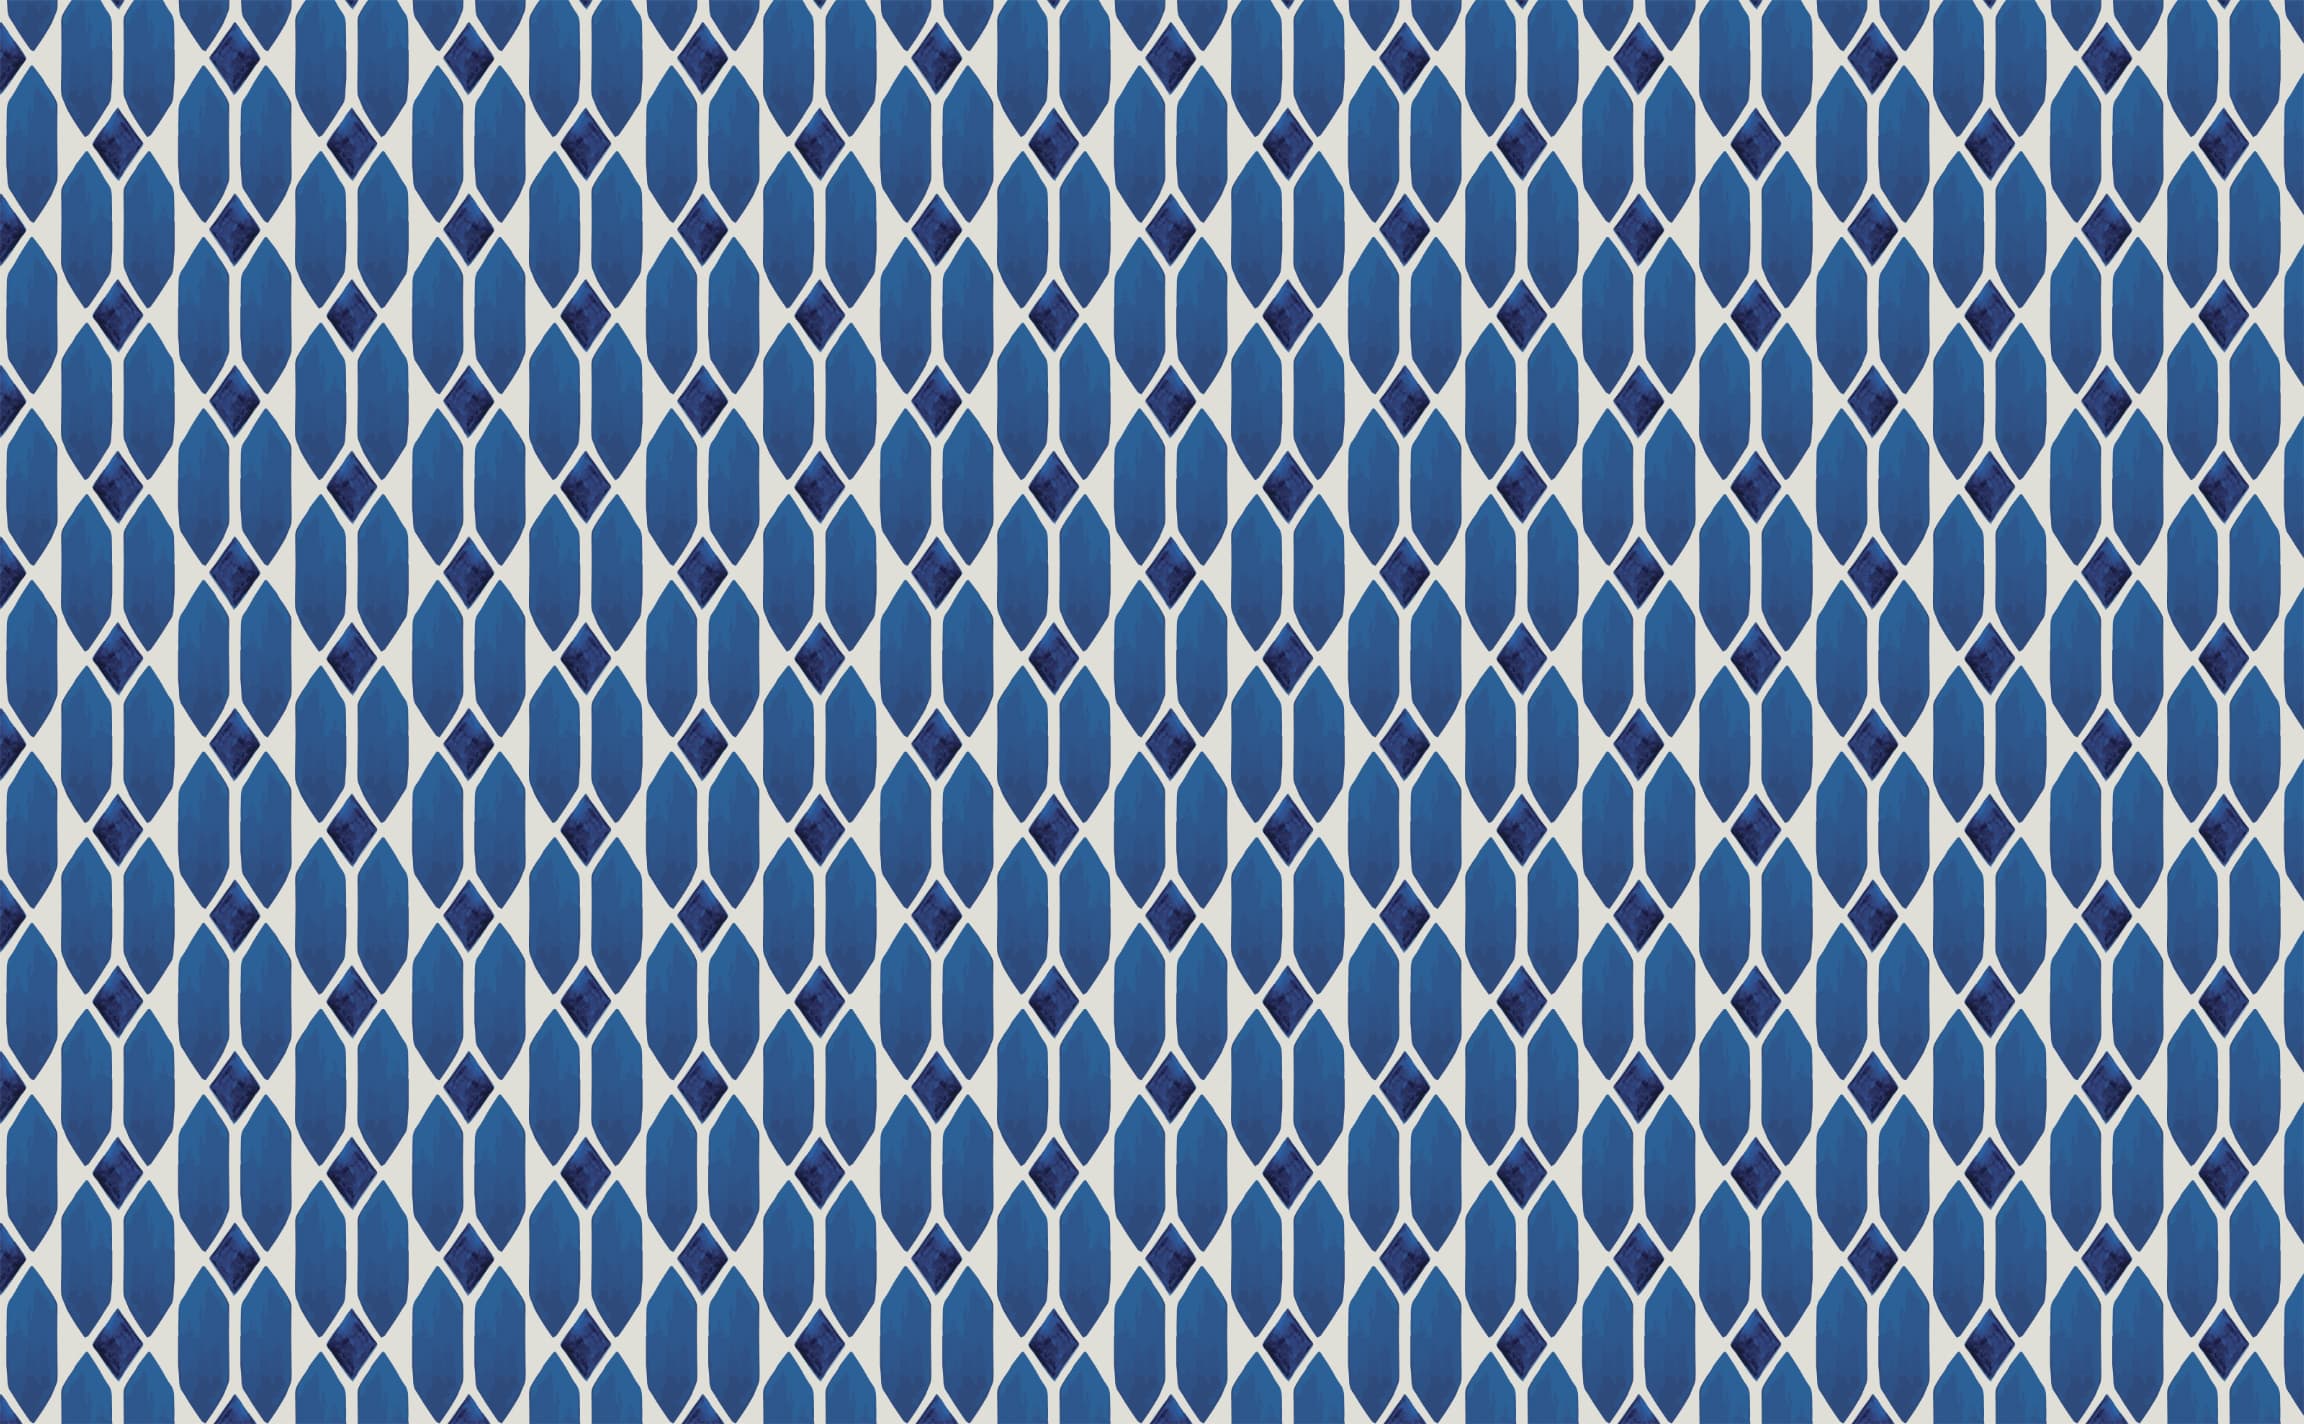 blue diamond pattern background